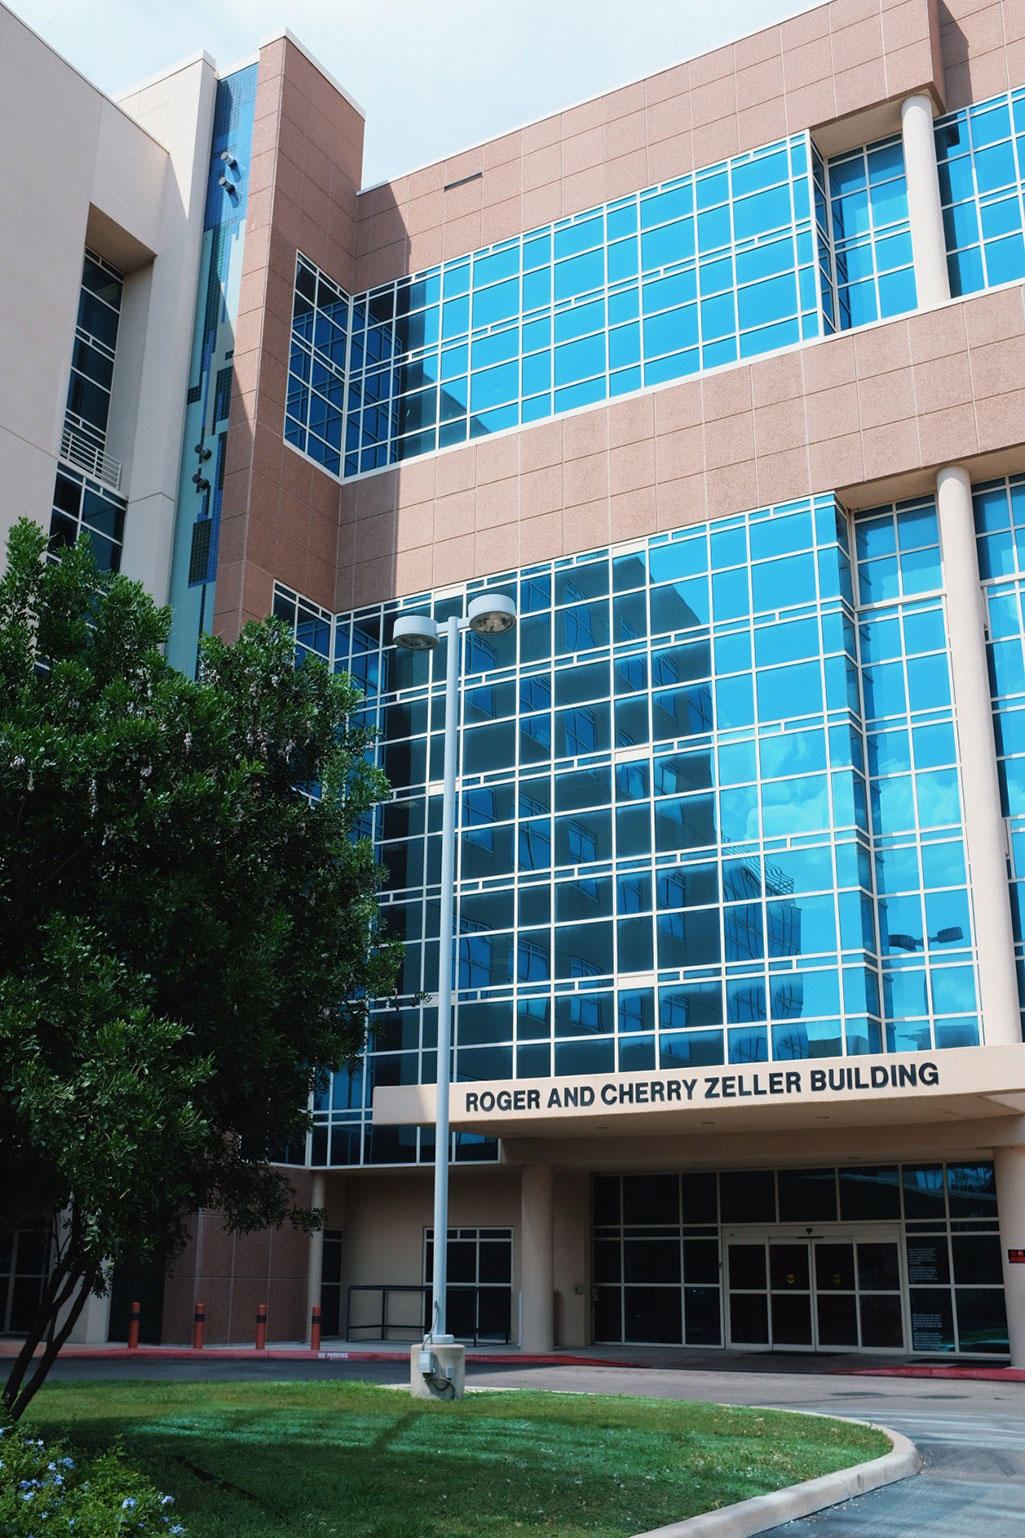 Breast Imaging Center - University Health (Closed) San Antonio (210)644-2900